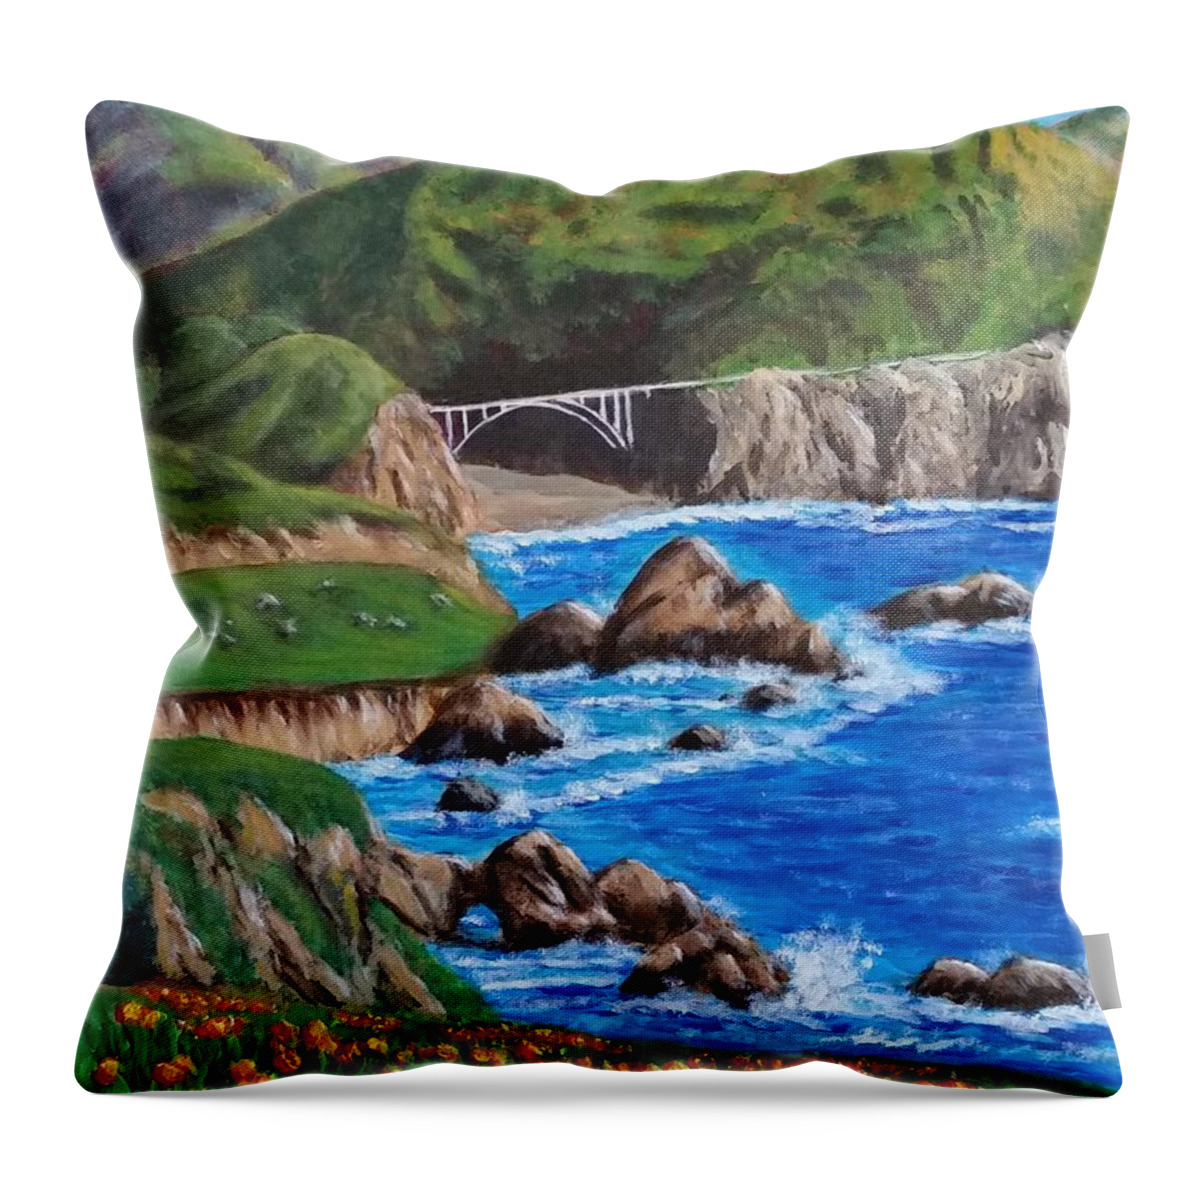 California Coastline Throw Pillow featuring the painting California Coastline by Amelie Simmons